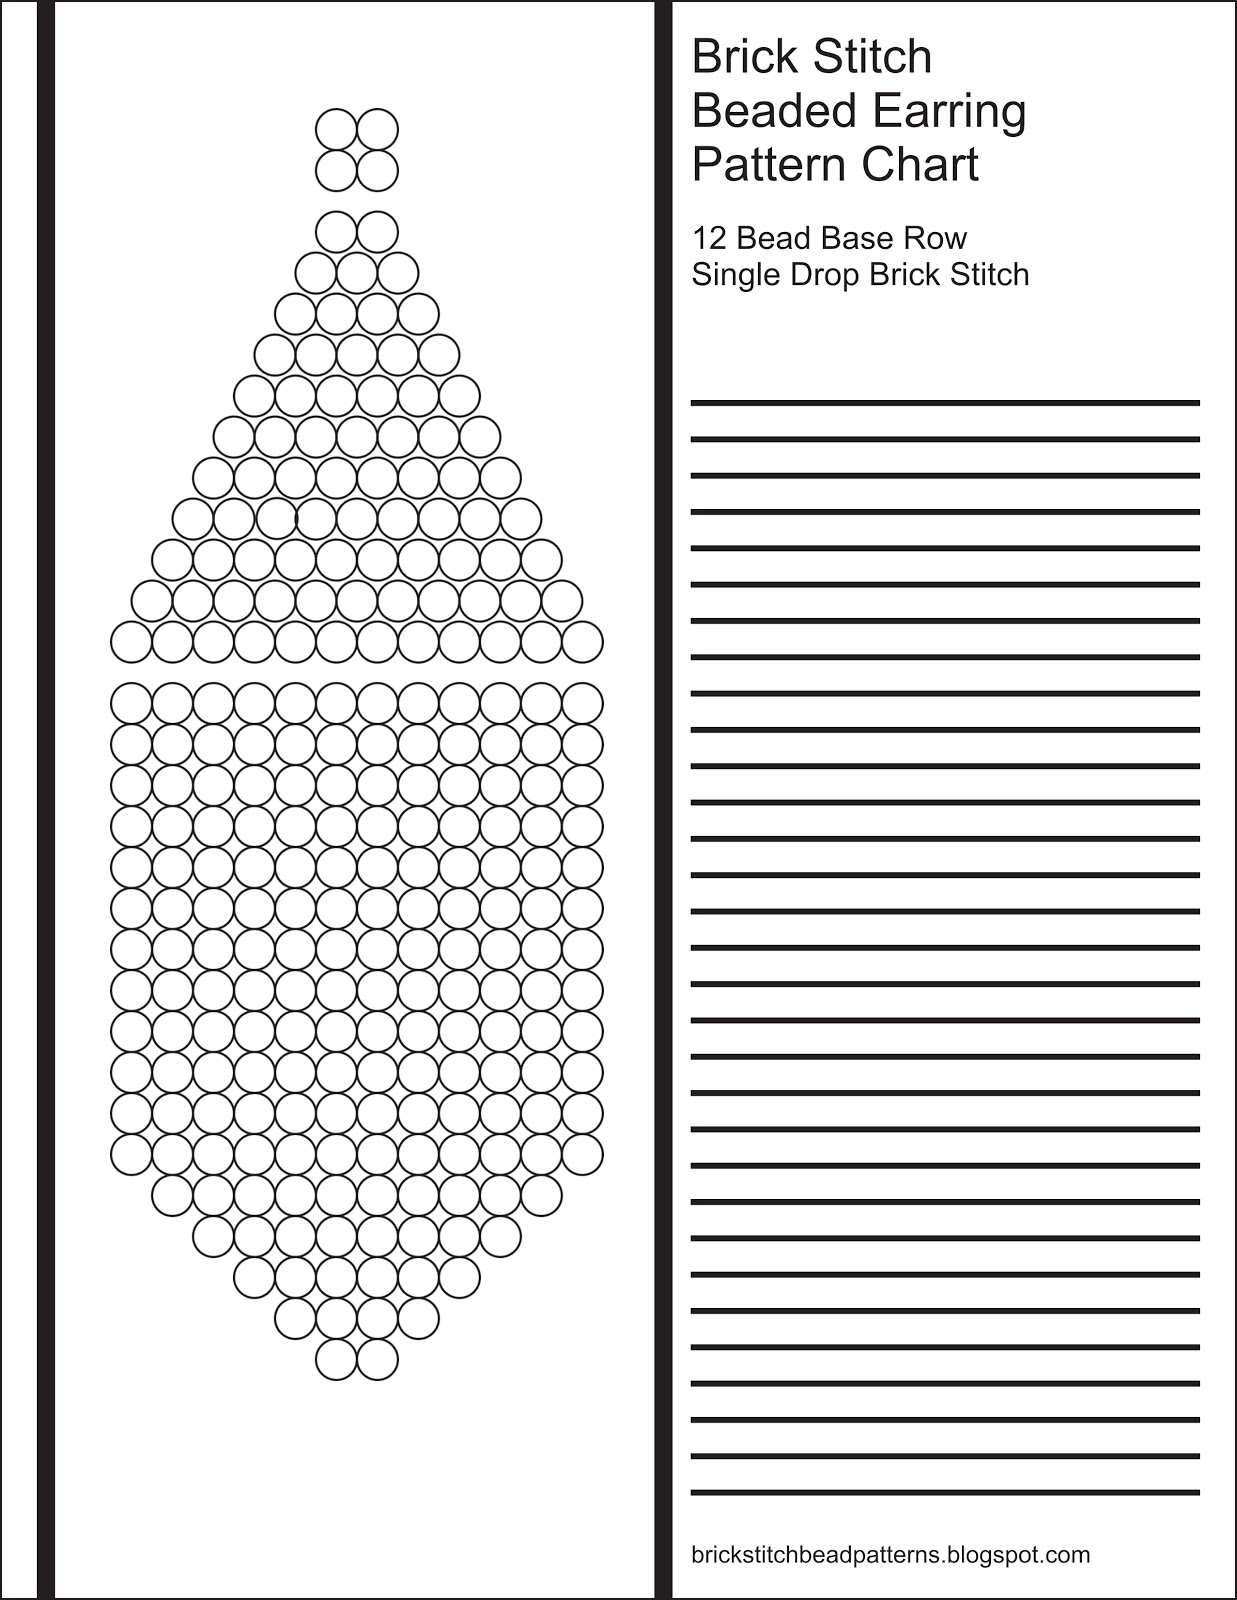 brick-stitch-bead-patterns-journal-12-bead-base-row-blank-round-beaded-earring-pattern-chart